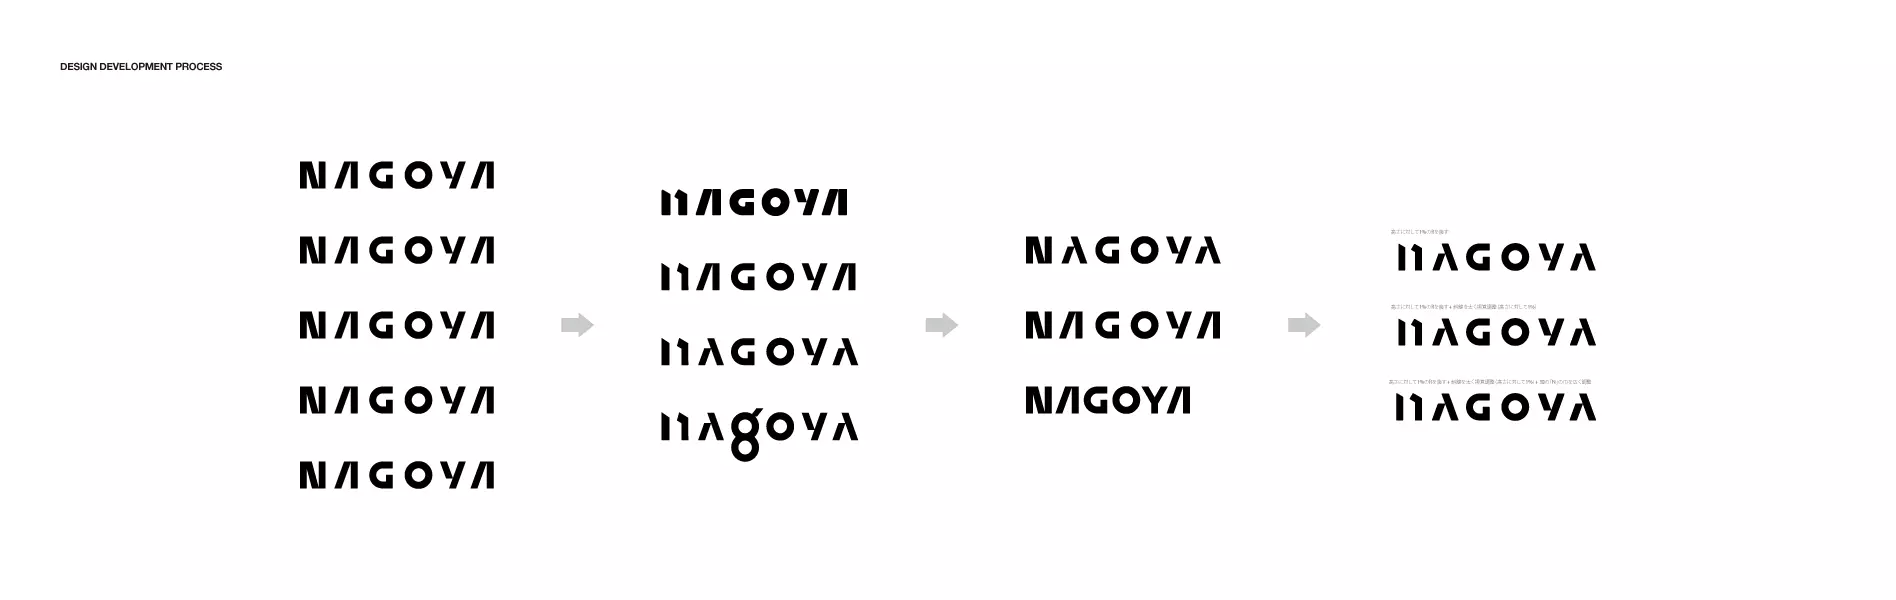 Nagoya Movementデザイン検討